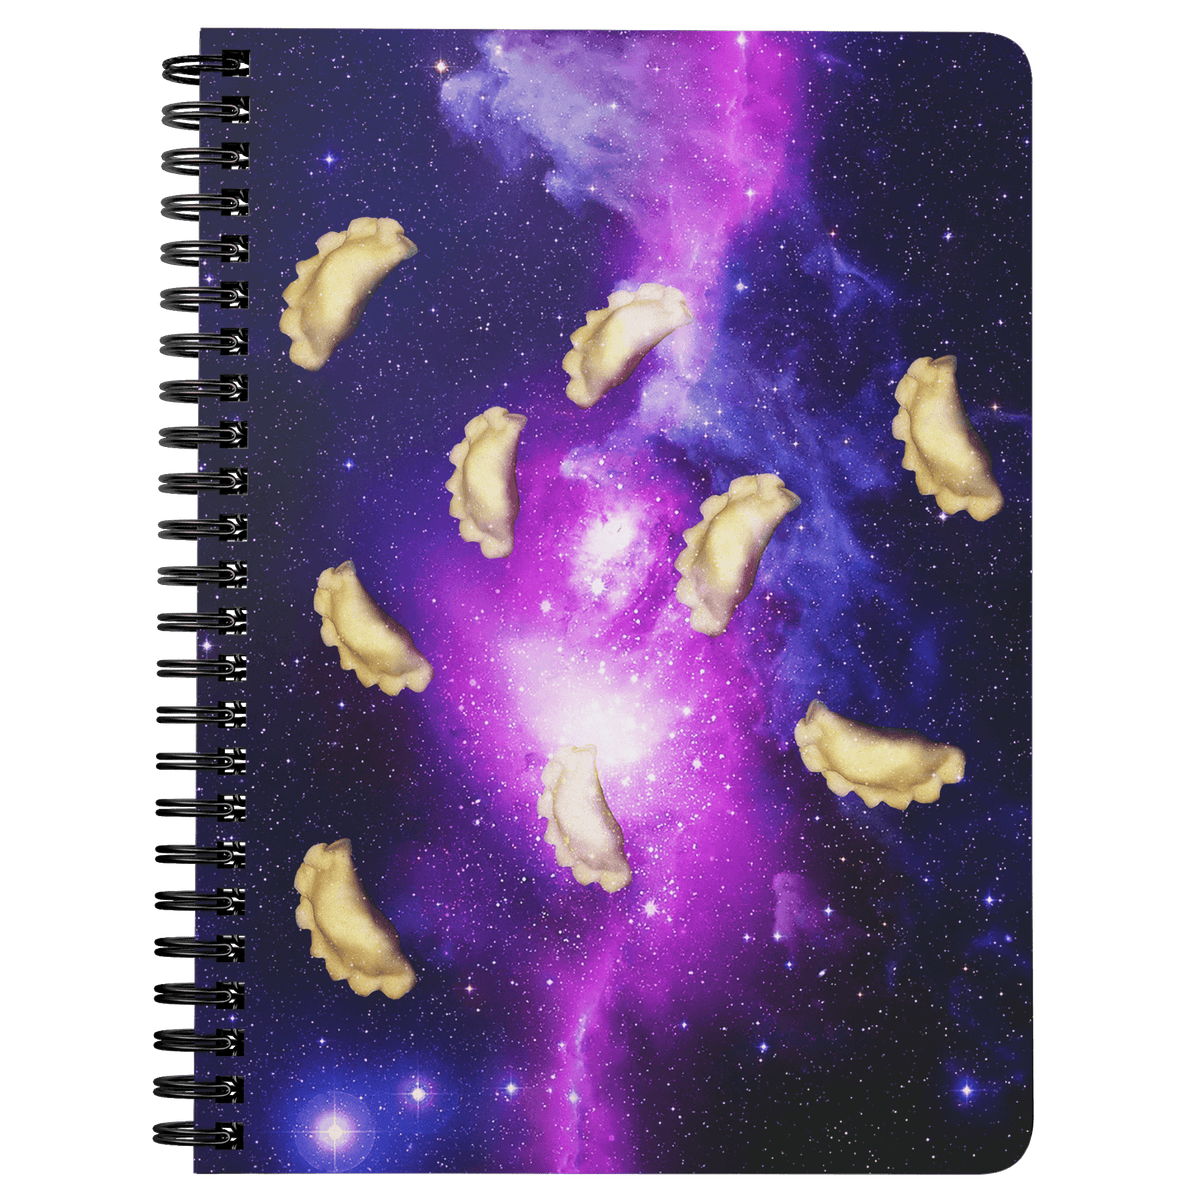 Funny Space Pierogi Spiral Bound Notebook Journals teelaunch Spiral Notebook  